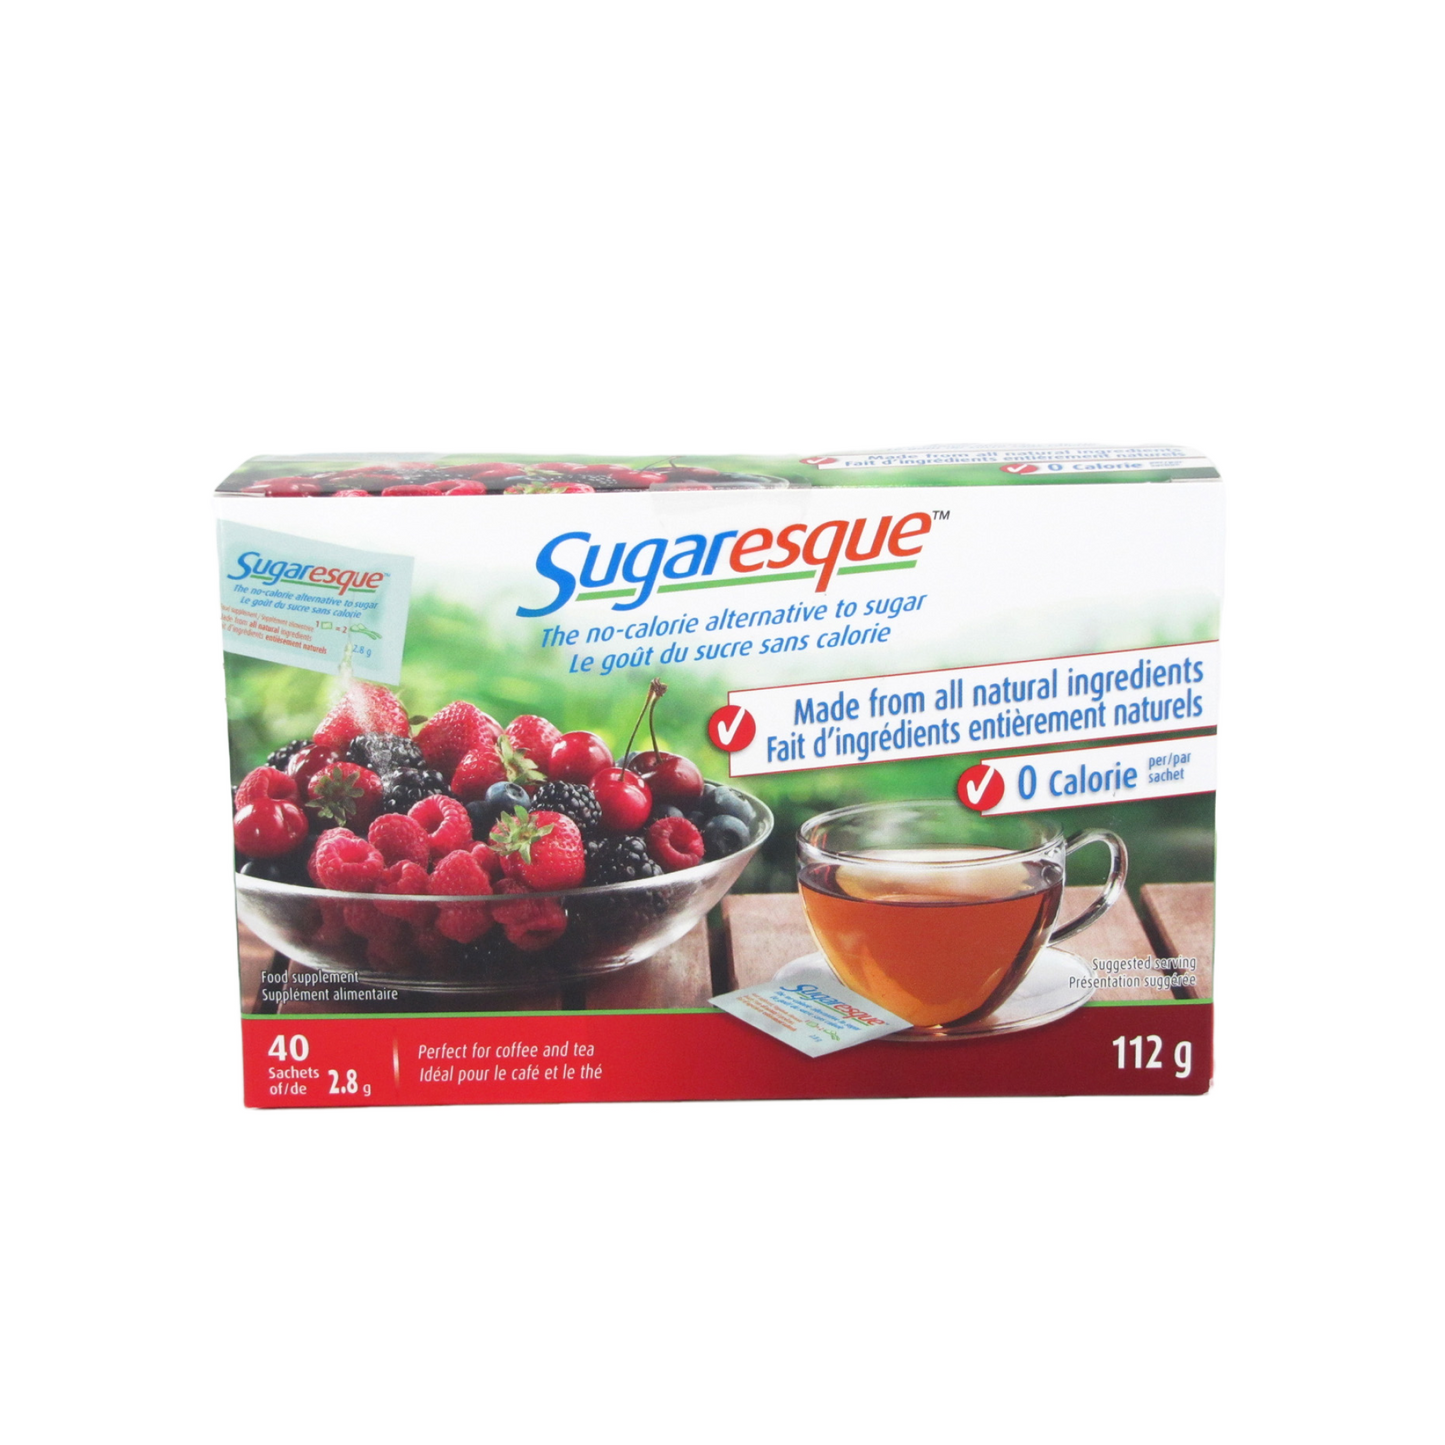 Sugaresque Sweetener 40 x 2.8g